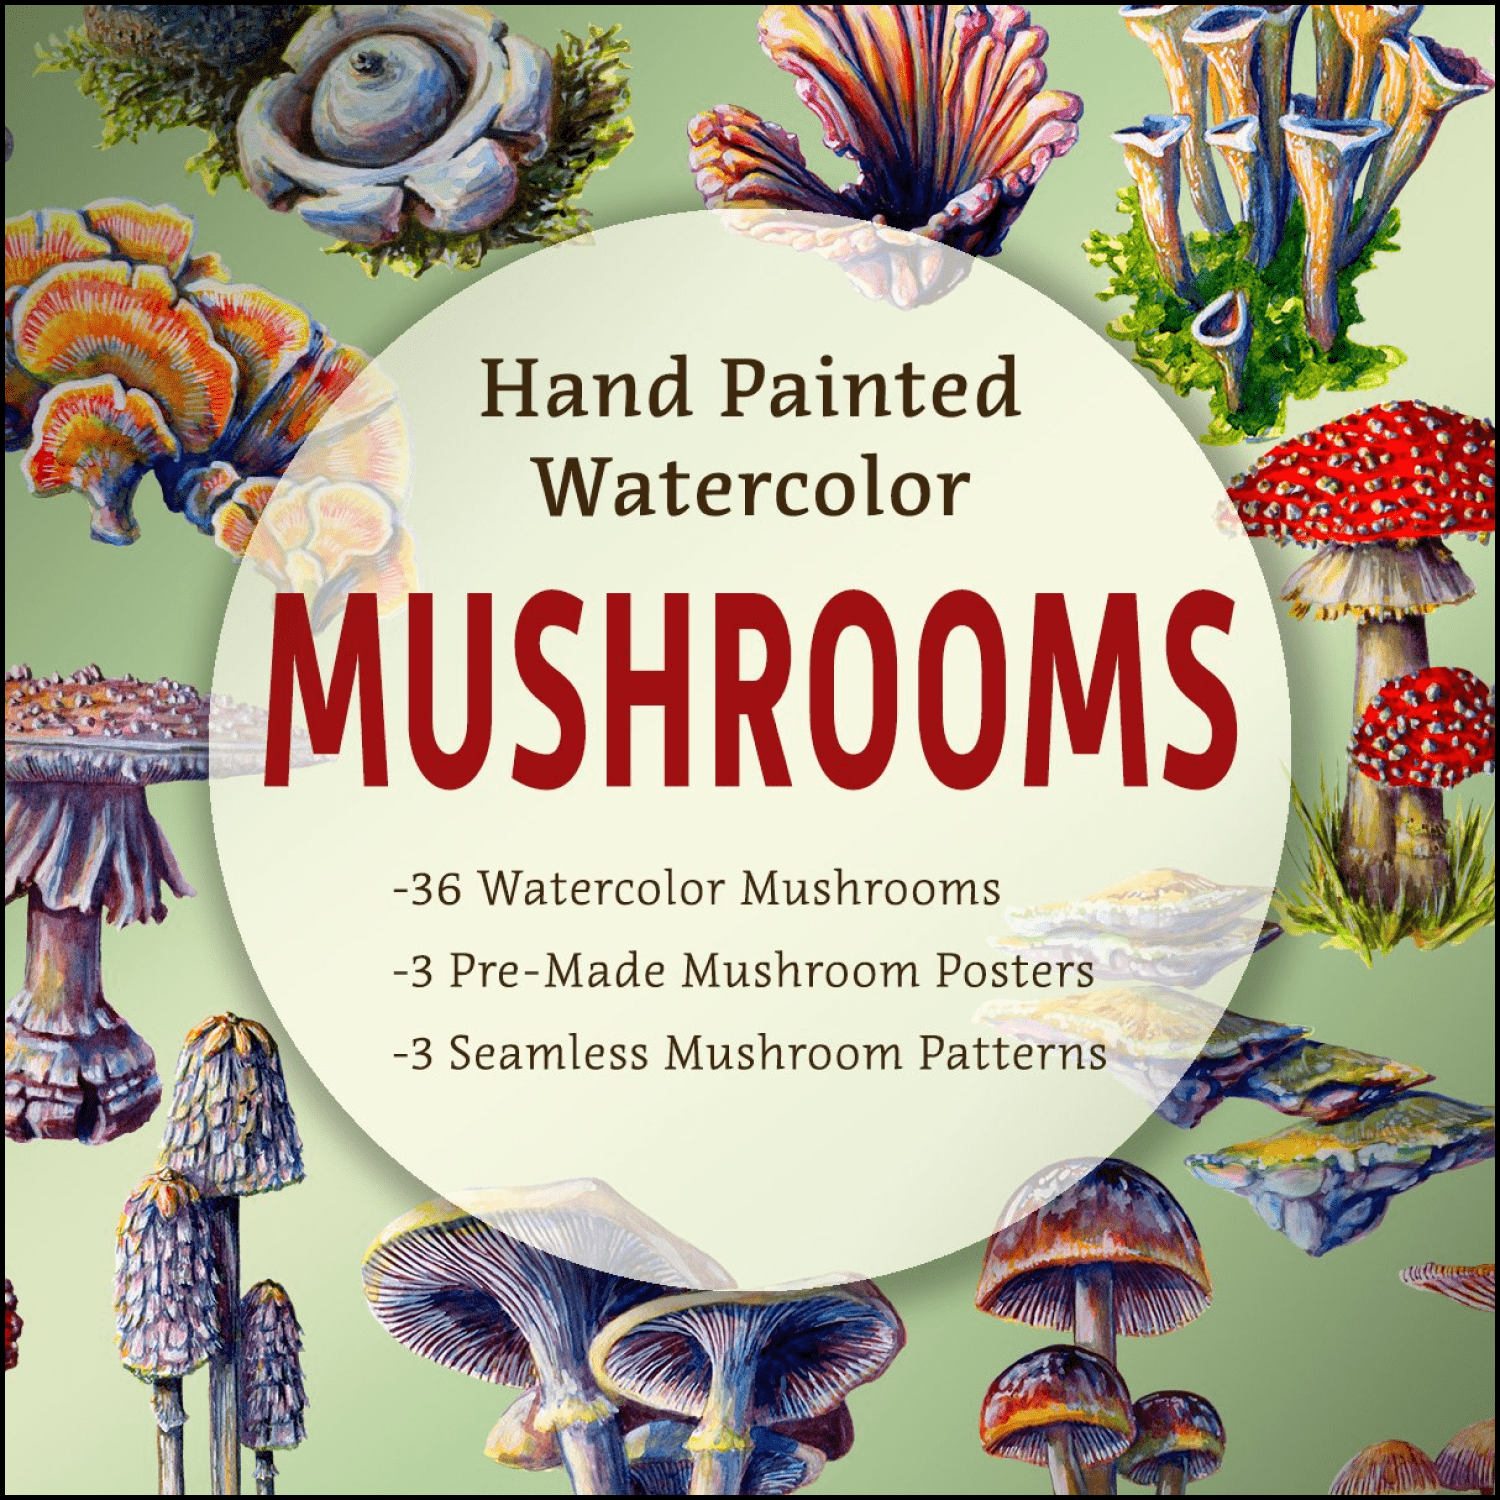 Hand painted mushroom set - main image preview.